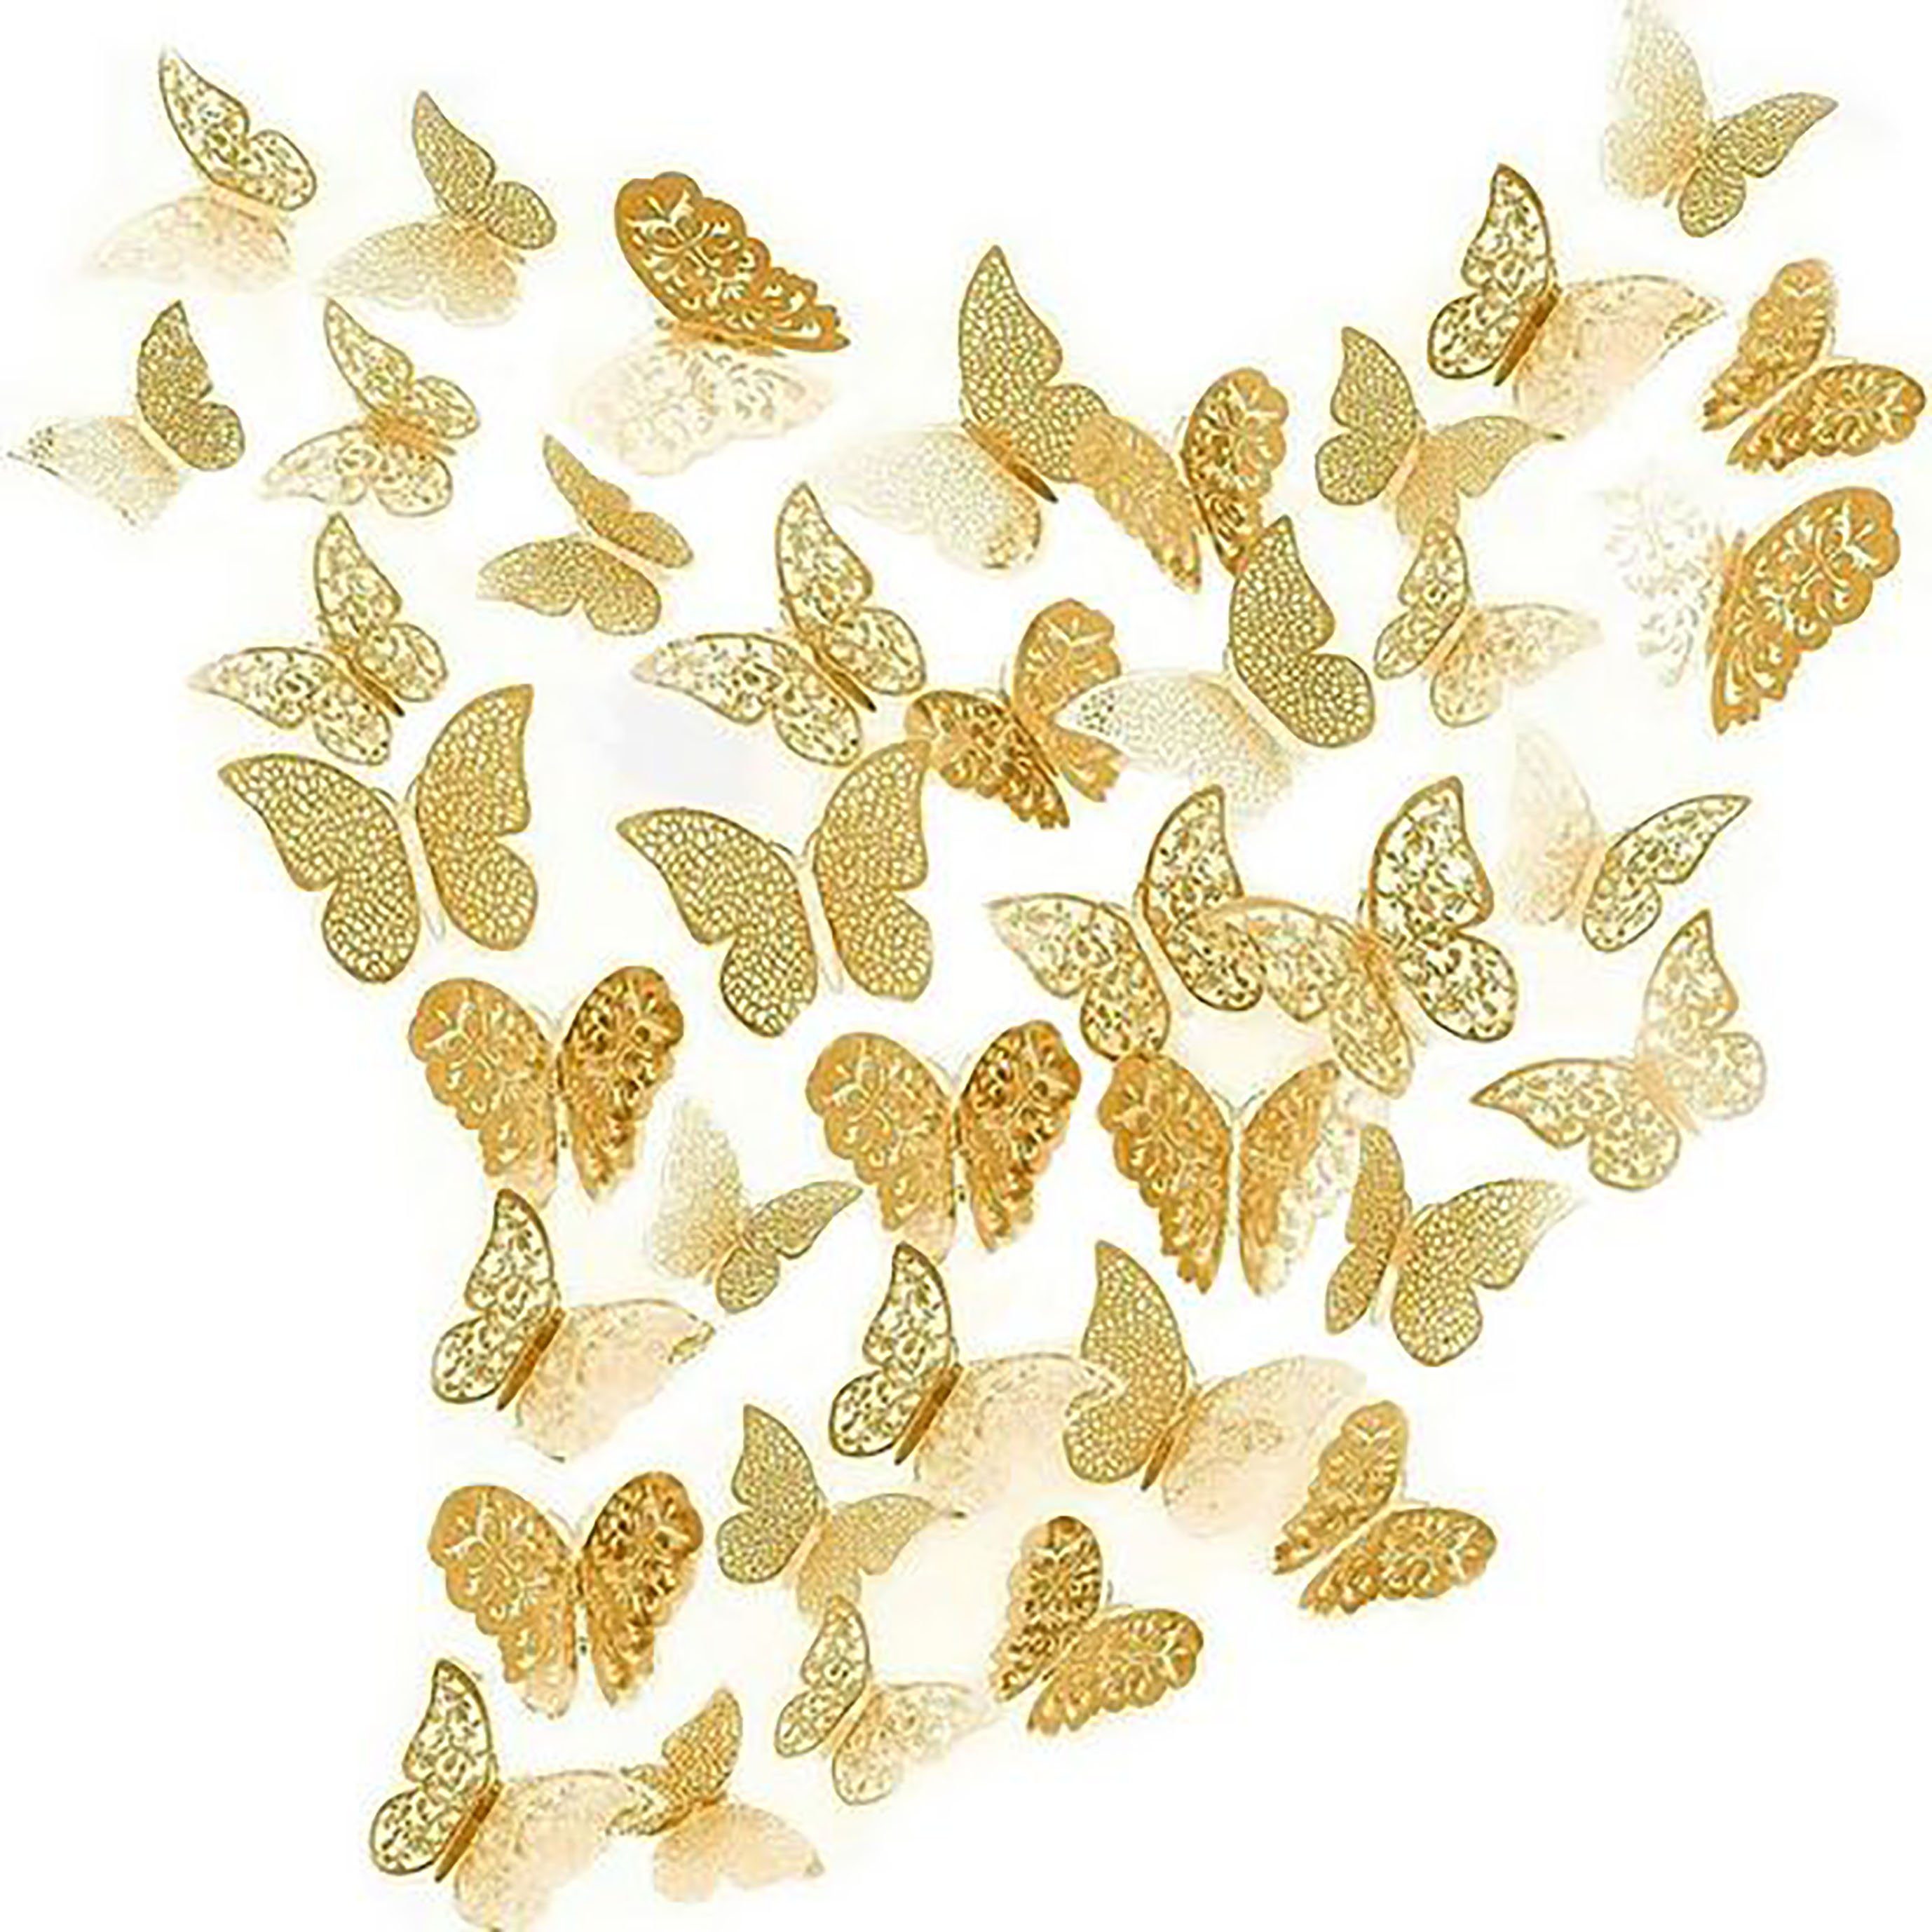 Abziehbild SRRINM Schmetterling Papierdekoration Wandaufkleber Dekoration 3D